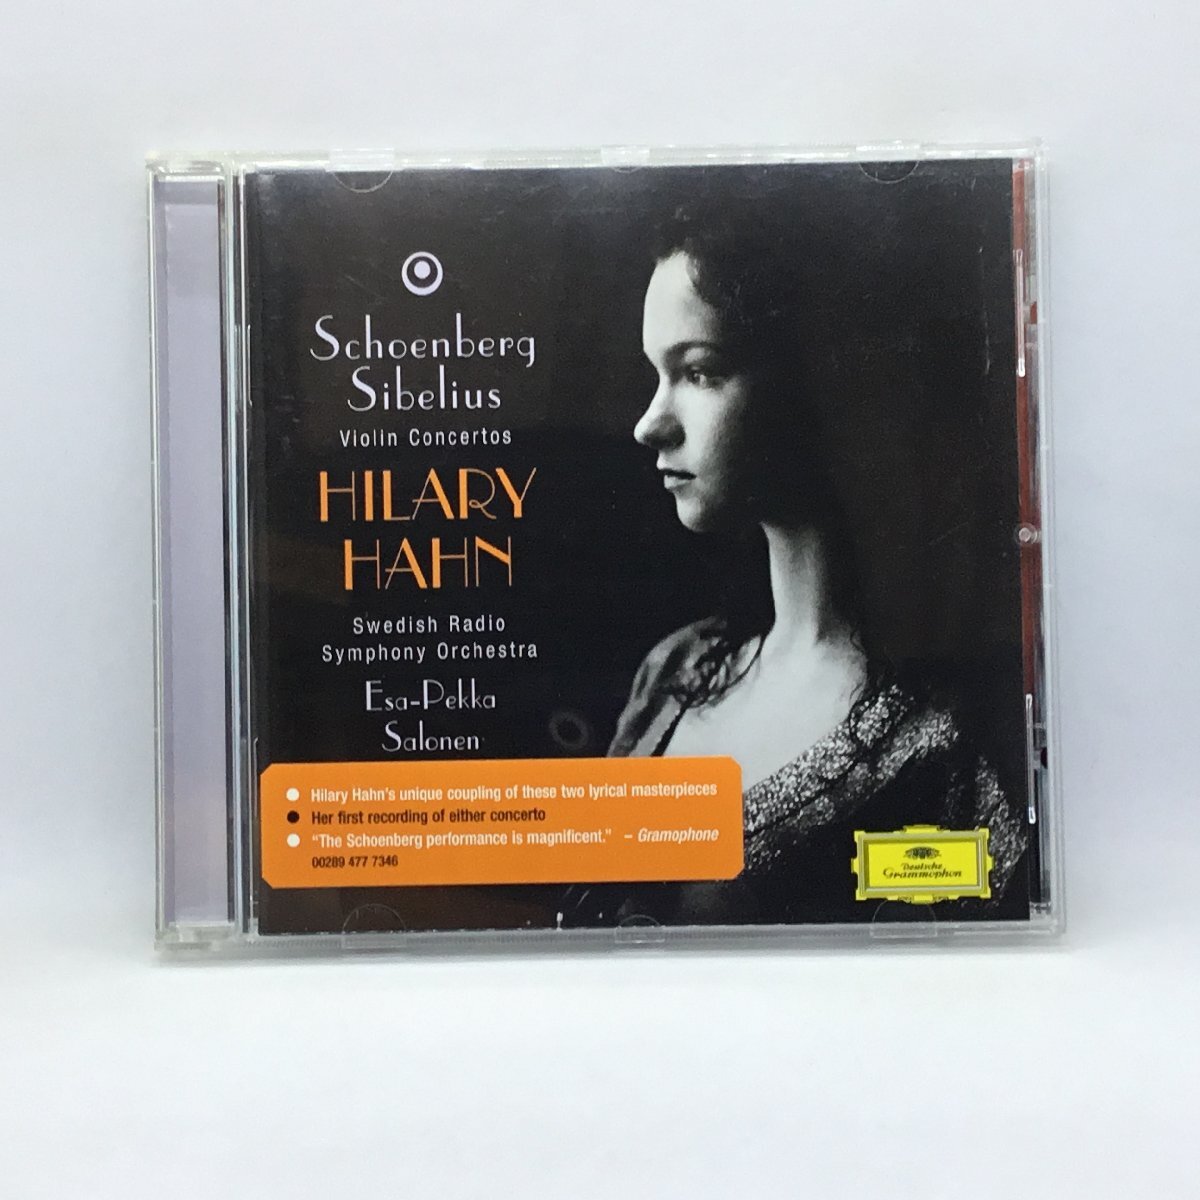  Hillary * Haan Hilary Hahn / Schoenberg/Sibelius Violin Concertos (CD) 4777346